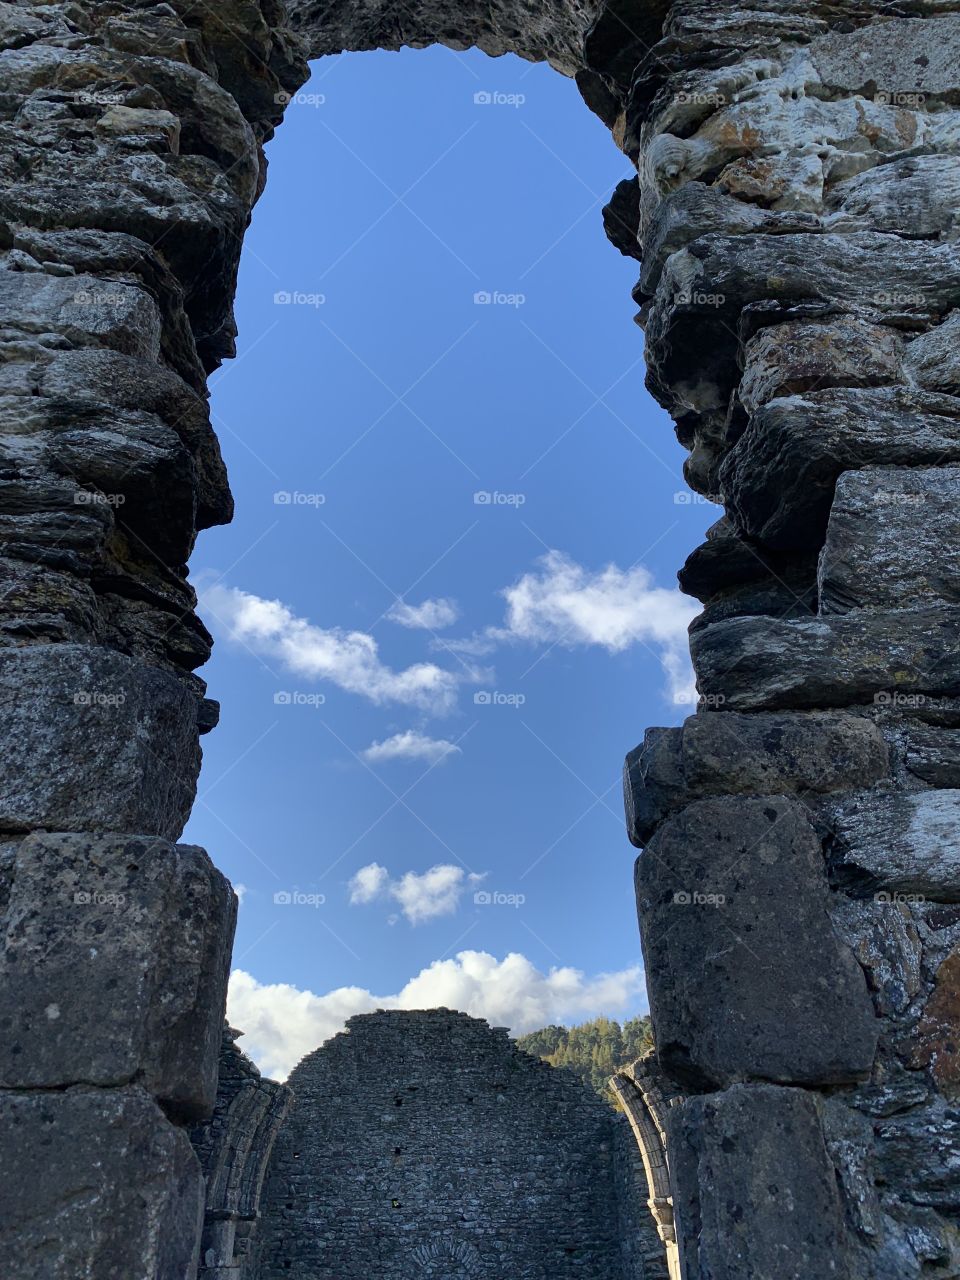 Looking through the stones in Ireland 